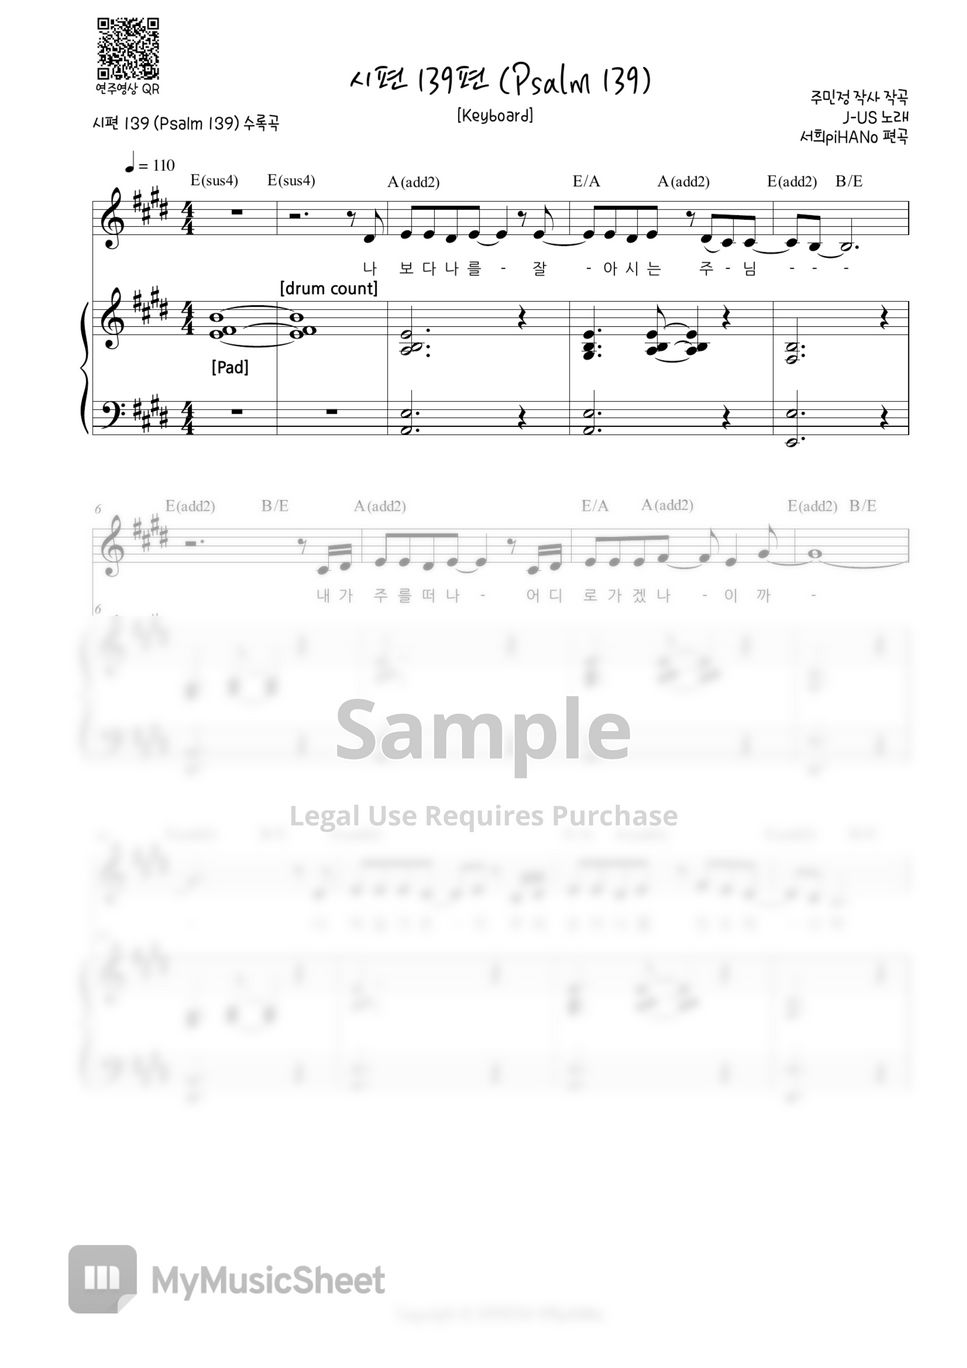 J-US - Psalm 139 (keyboard) by 서희piHANo